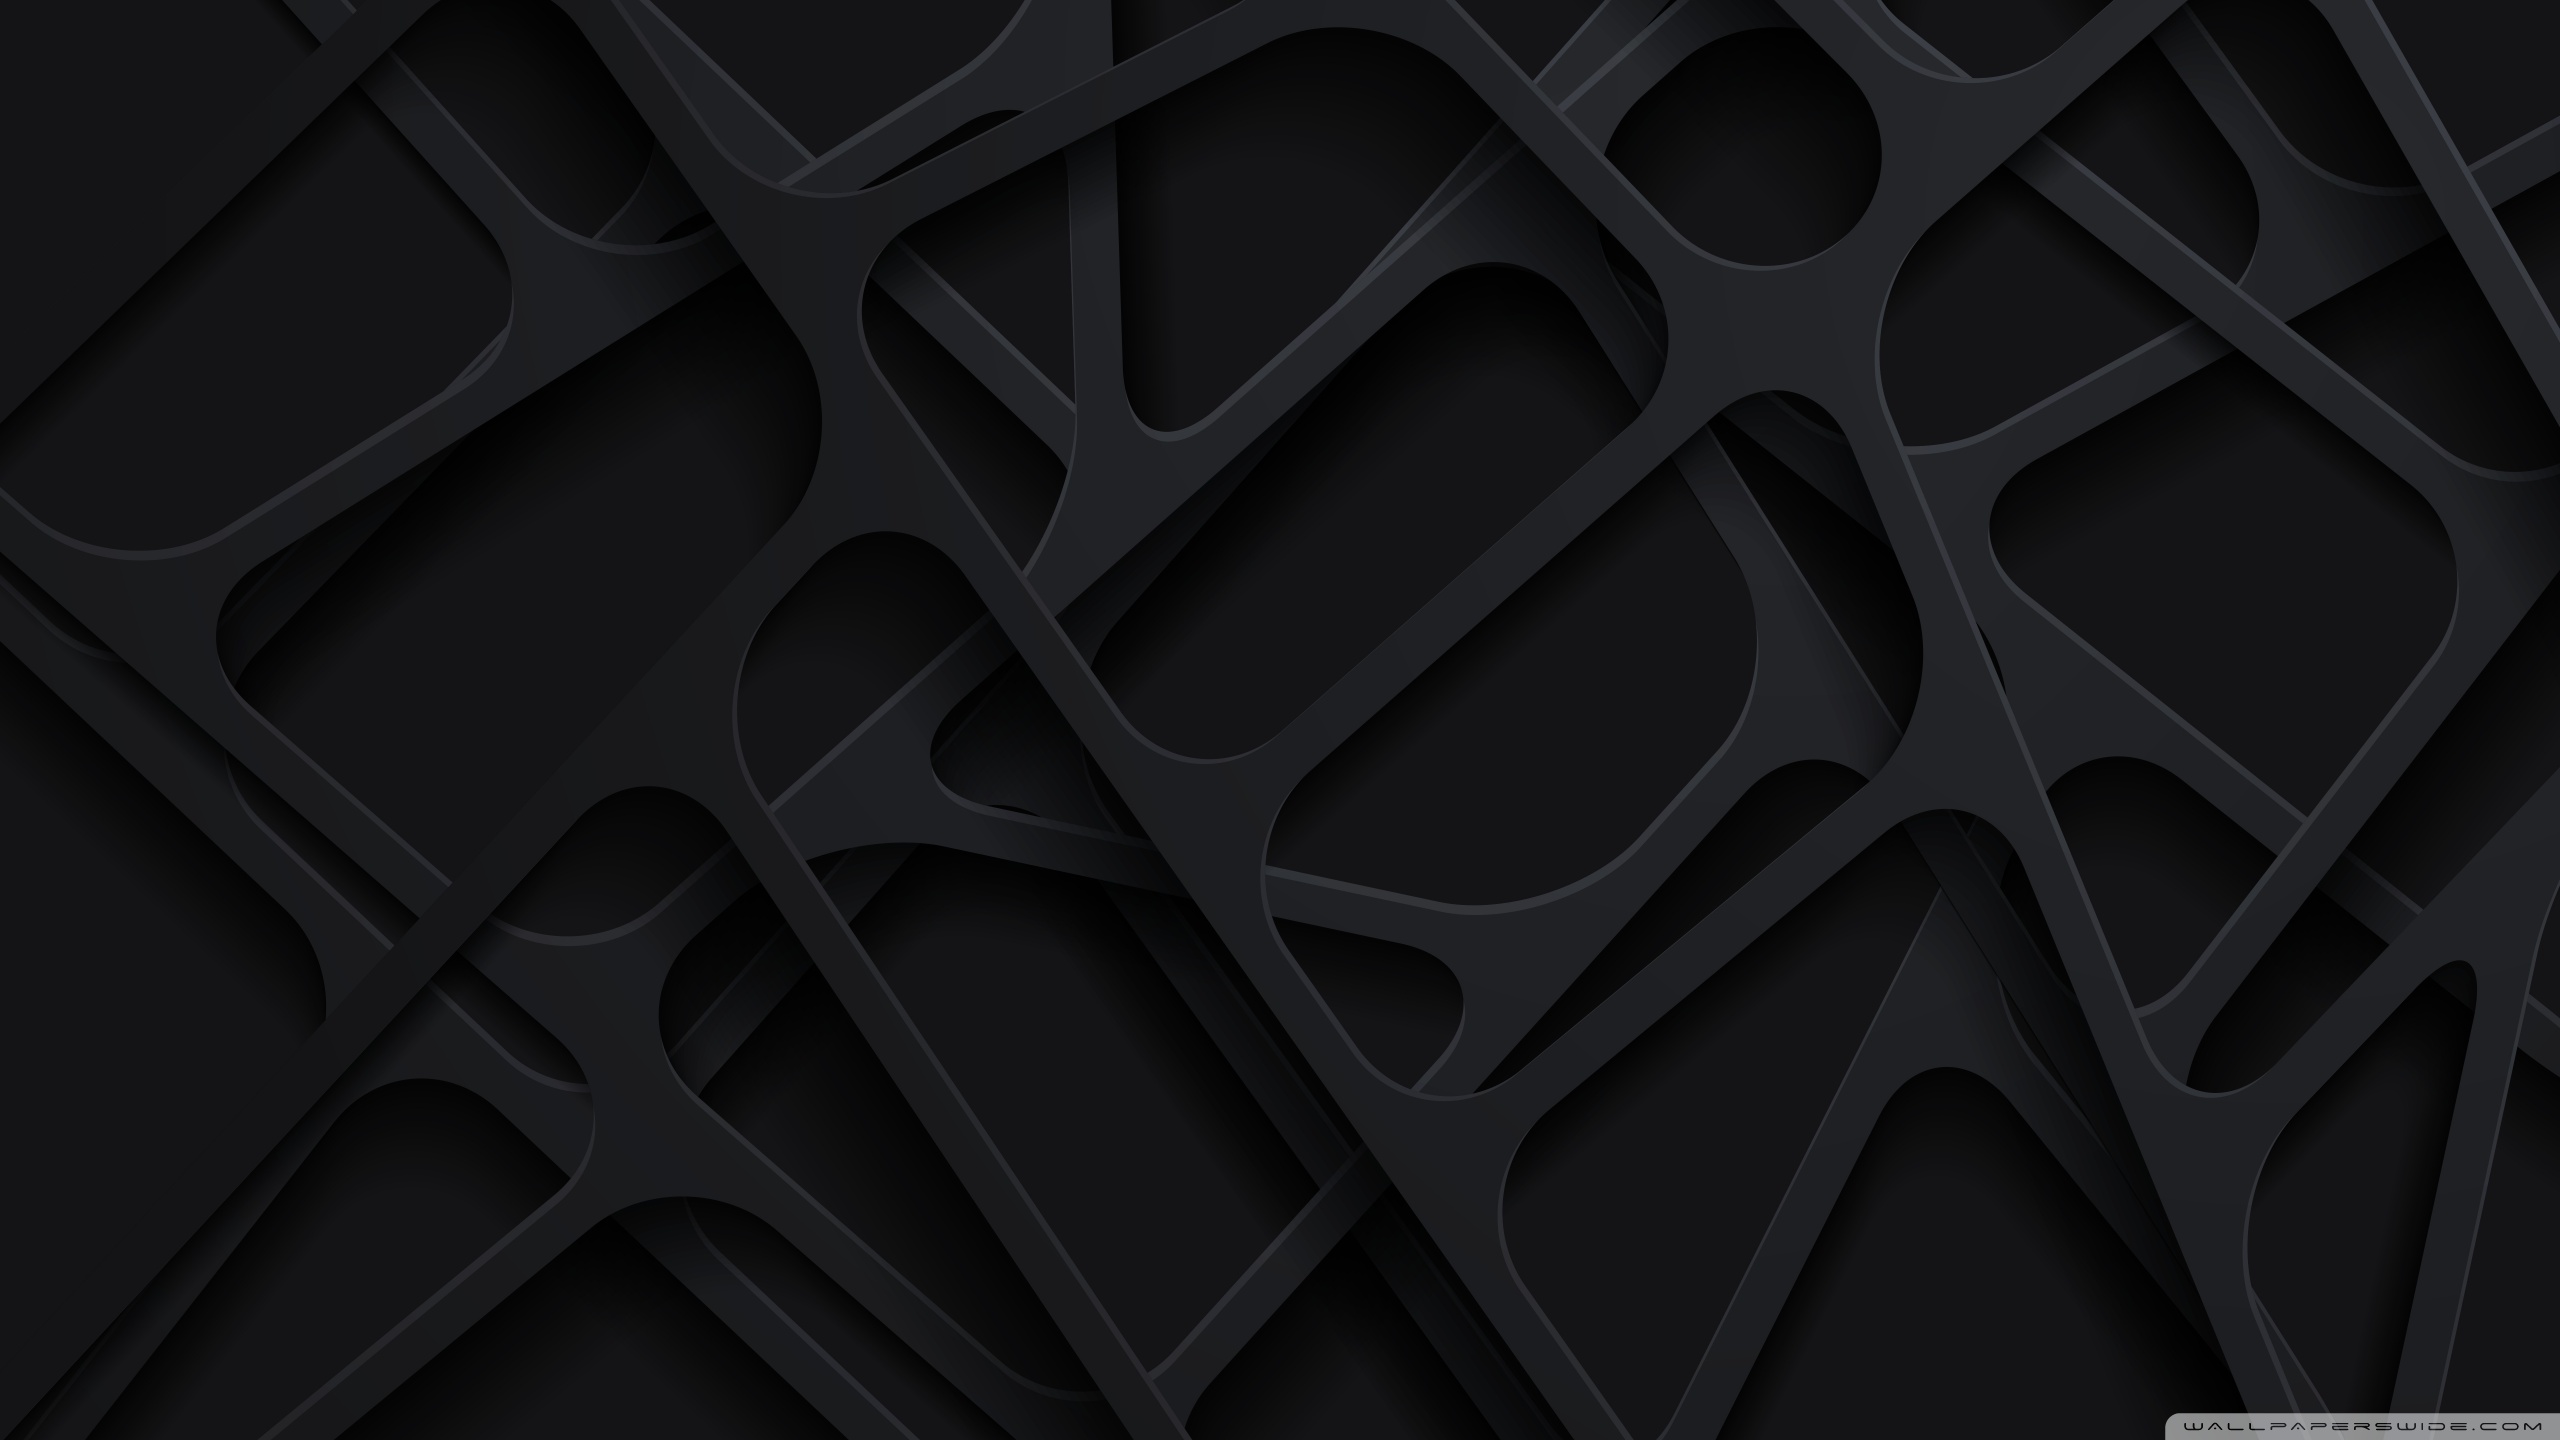 Download wallpaper 2560x1440 texture, black, dark, structure widescreen  16:9 hd background